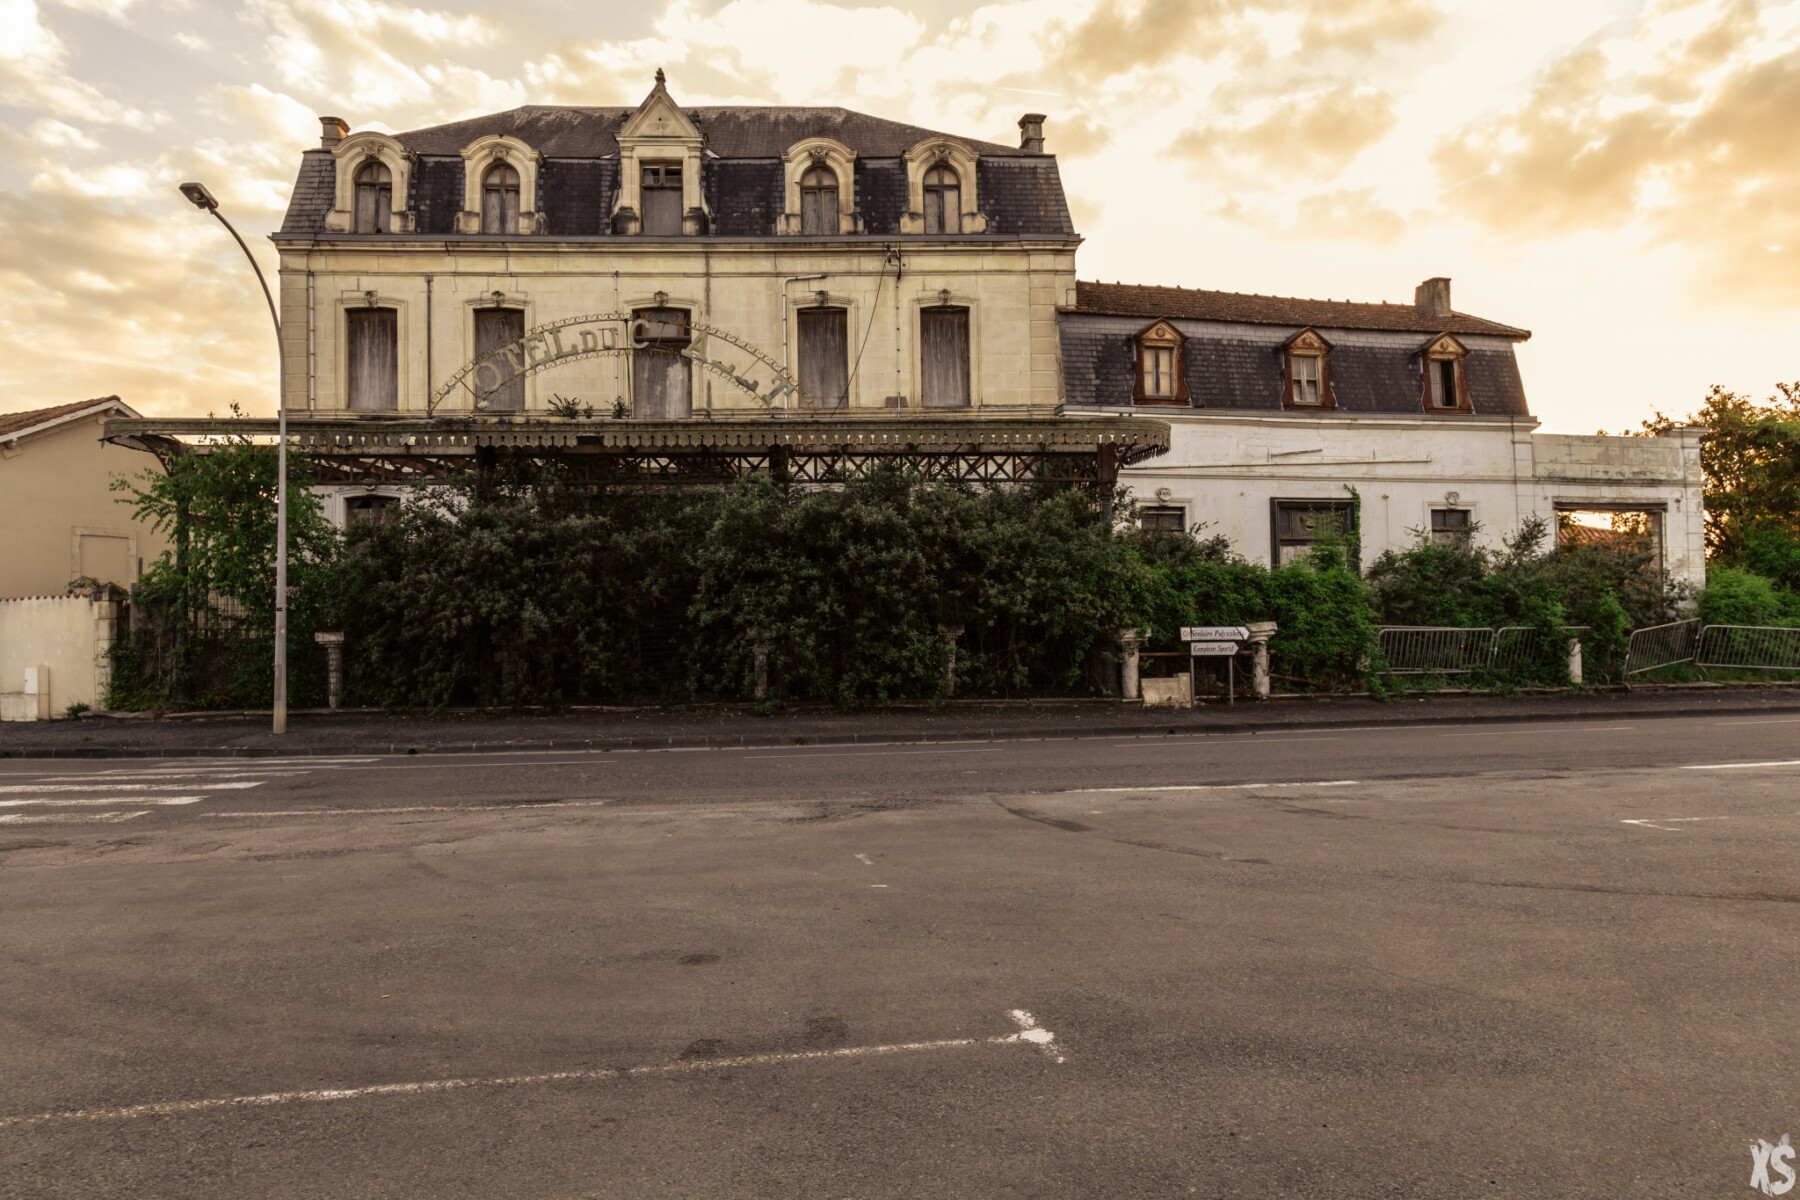 Hôtel abandonné en France | urbexsession.com/hotel-chalet-saint-jean-dangely | Urbex France